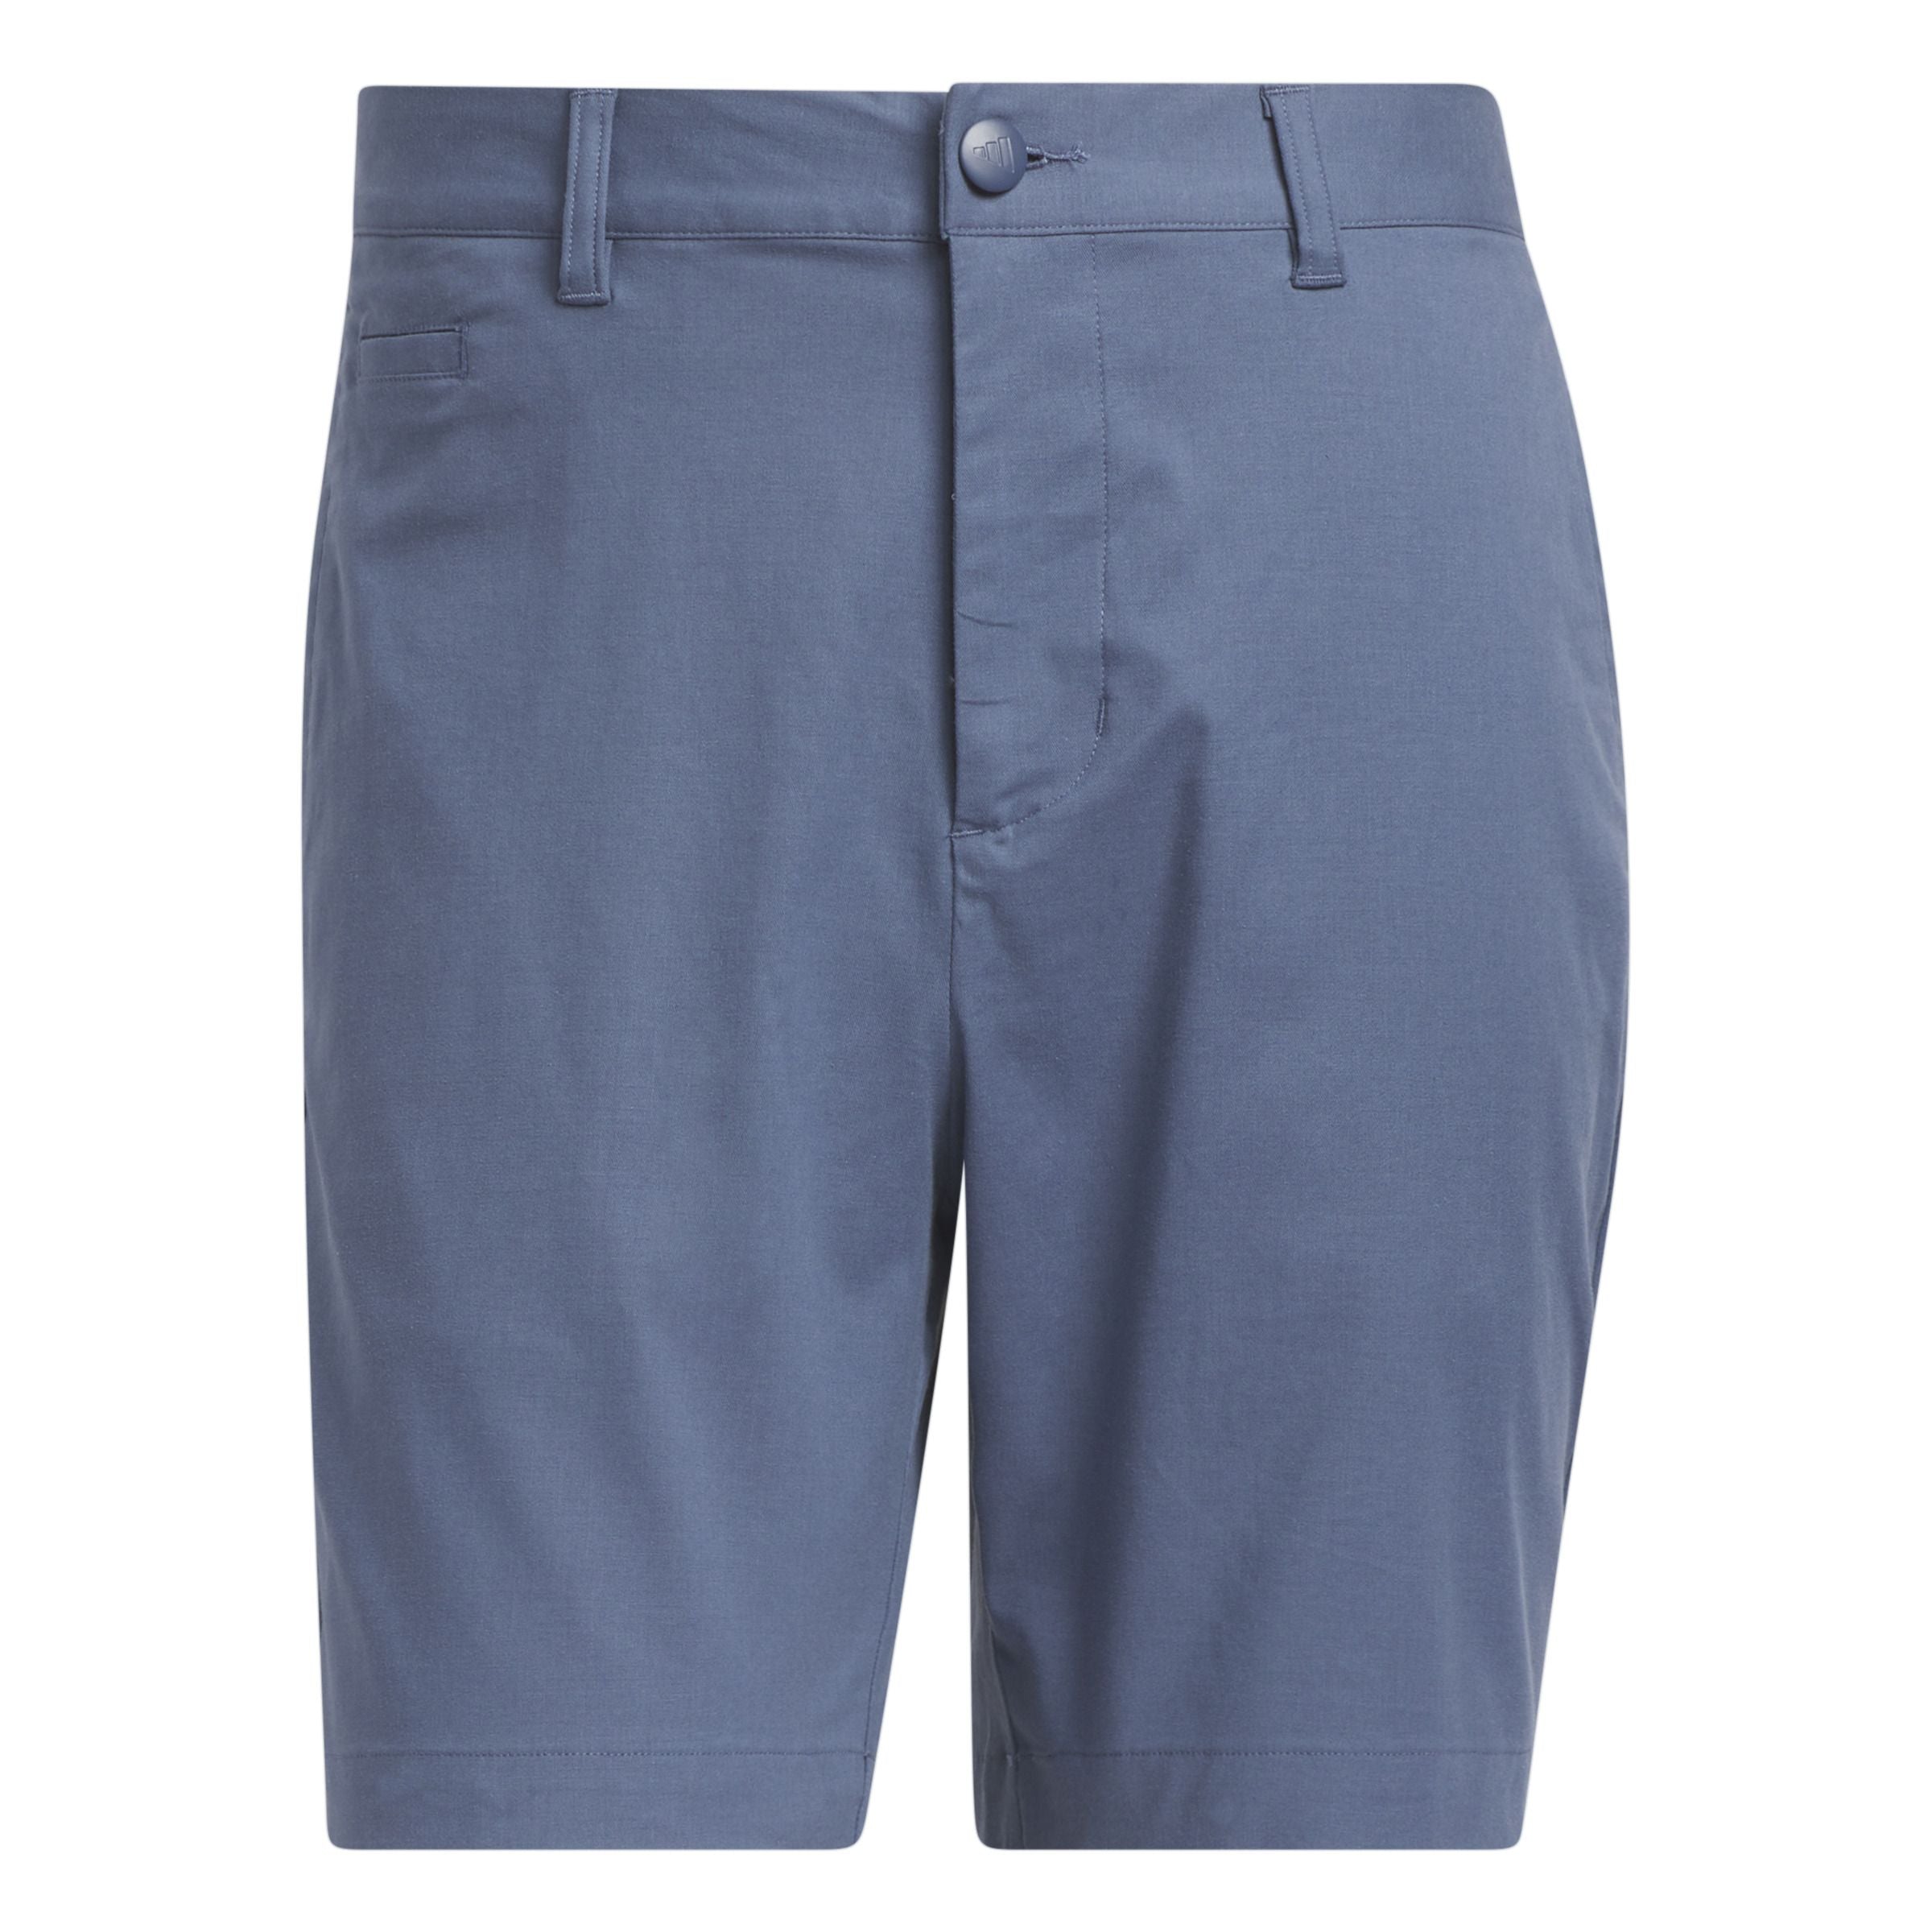 Adidas Go-To 5 Pocket Golf Shorts